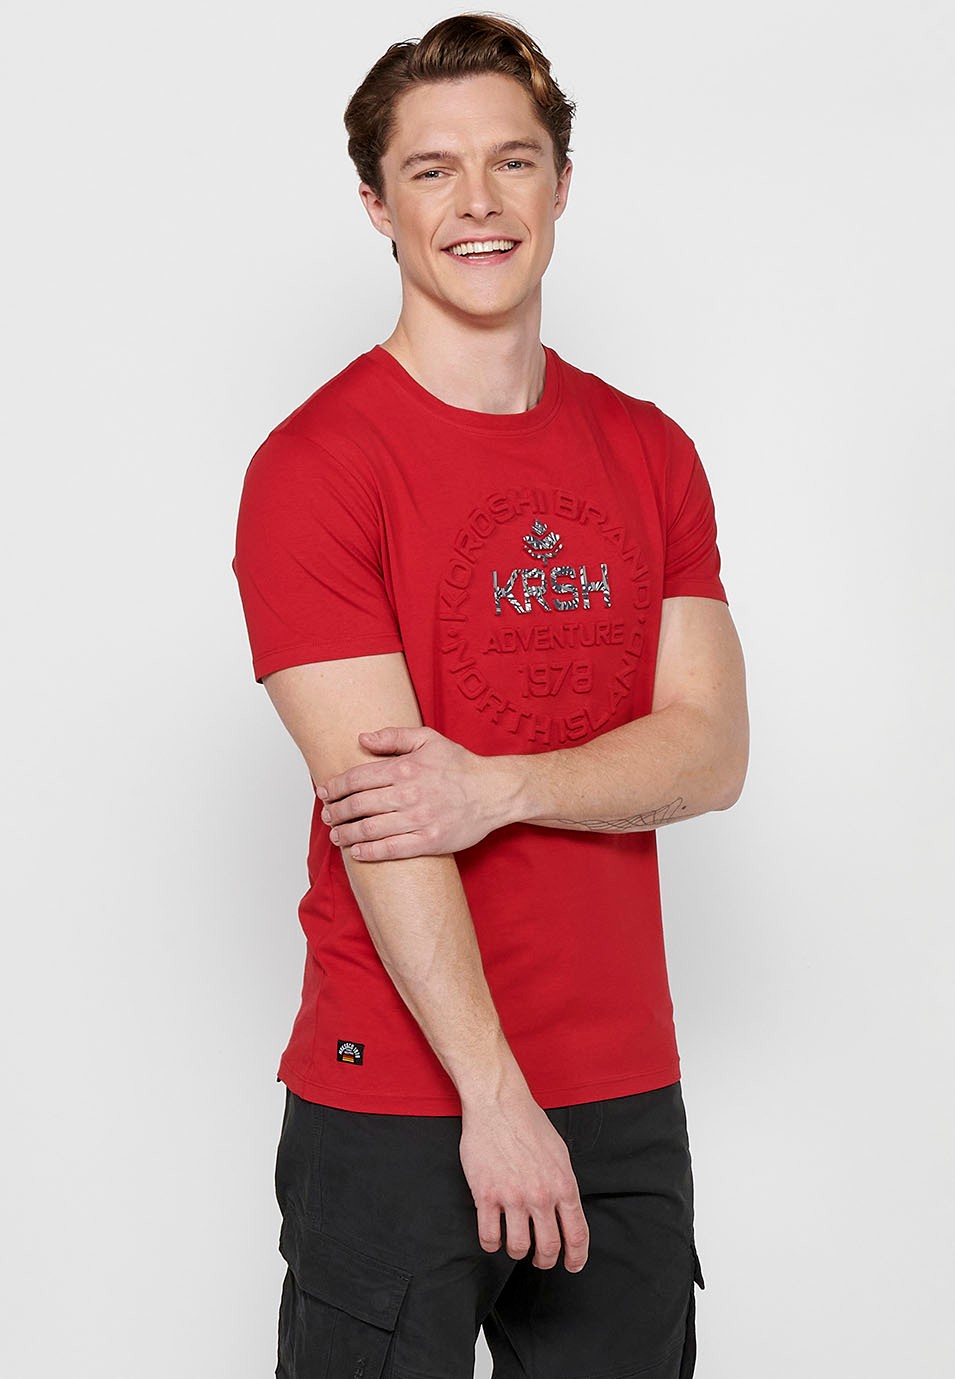 Men's Red Color Round Neck Cotton Short Sleeve T-shirt 3